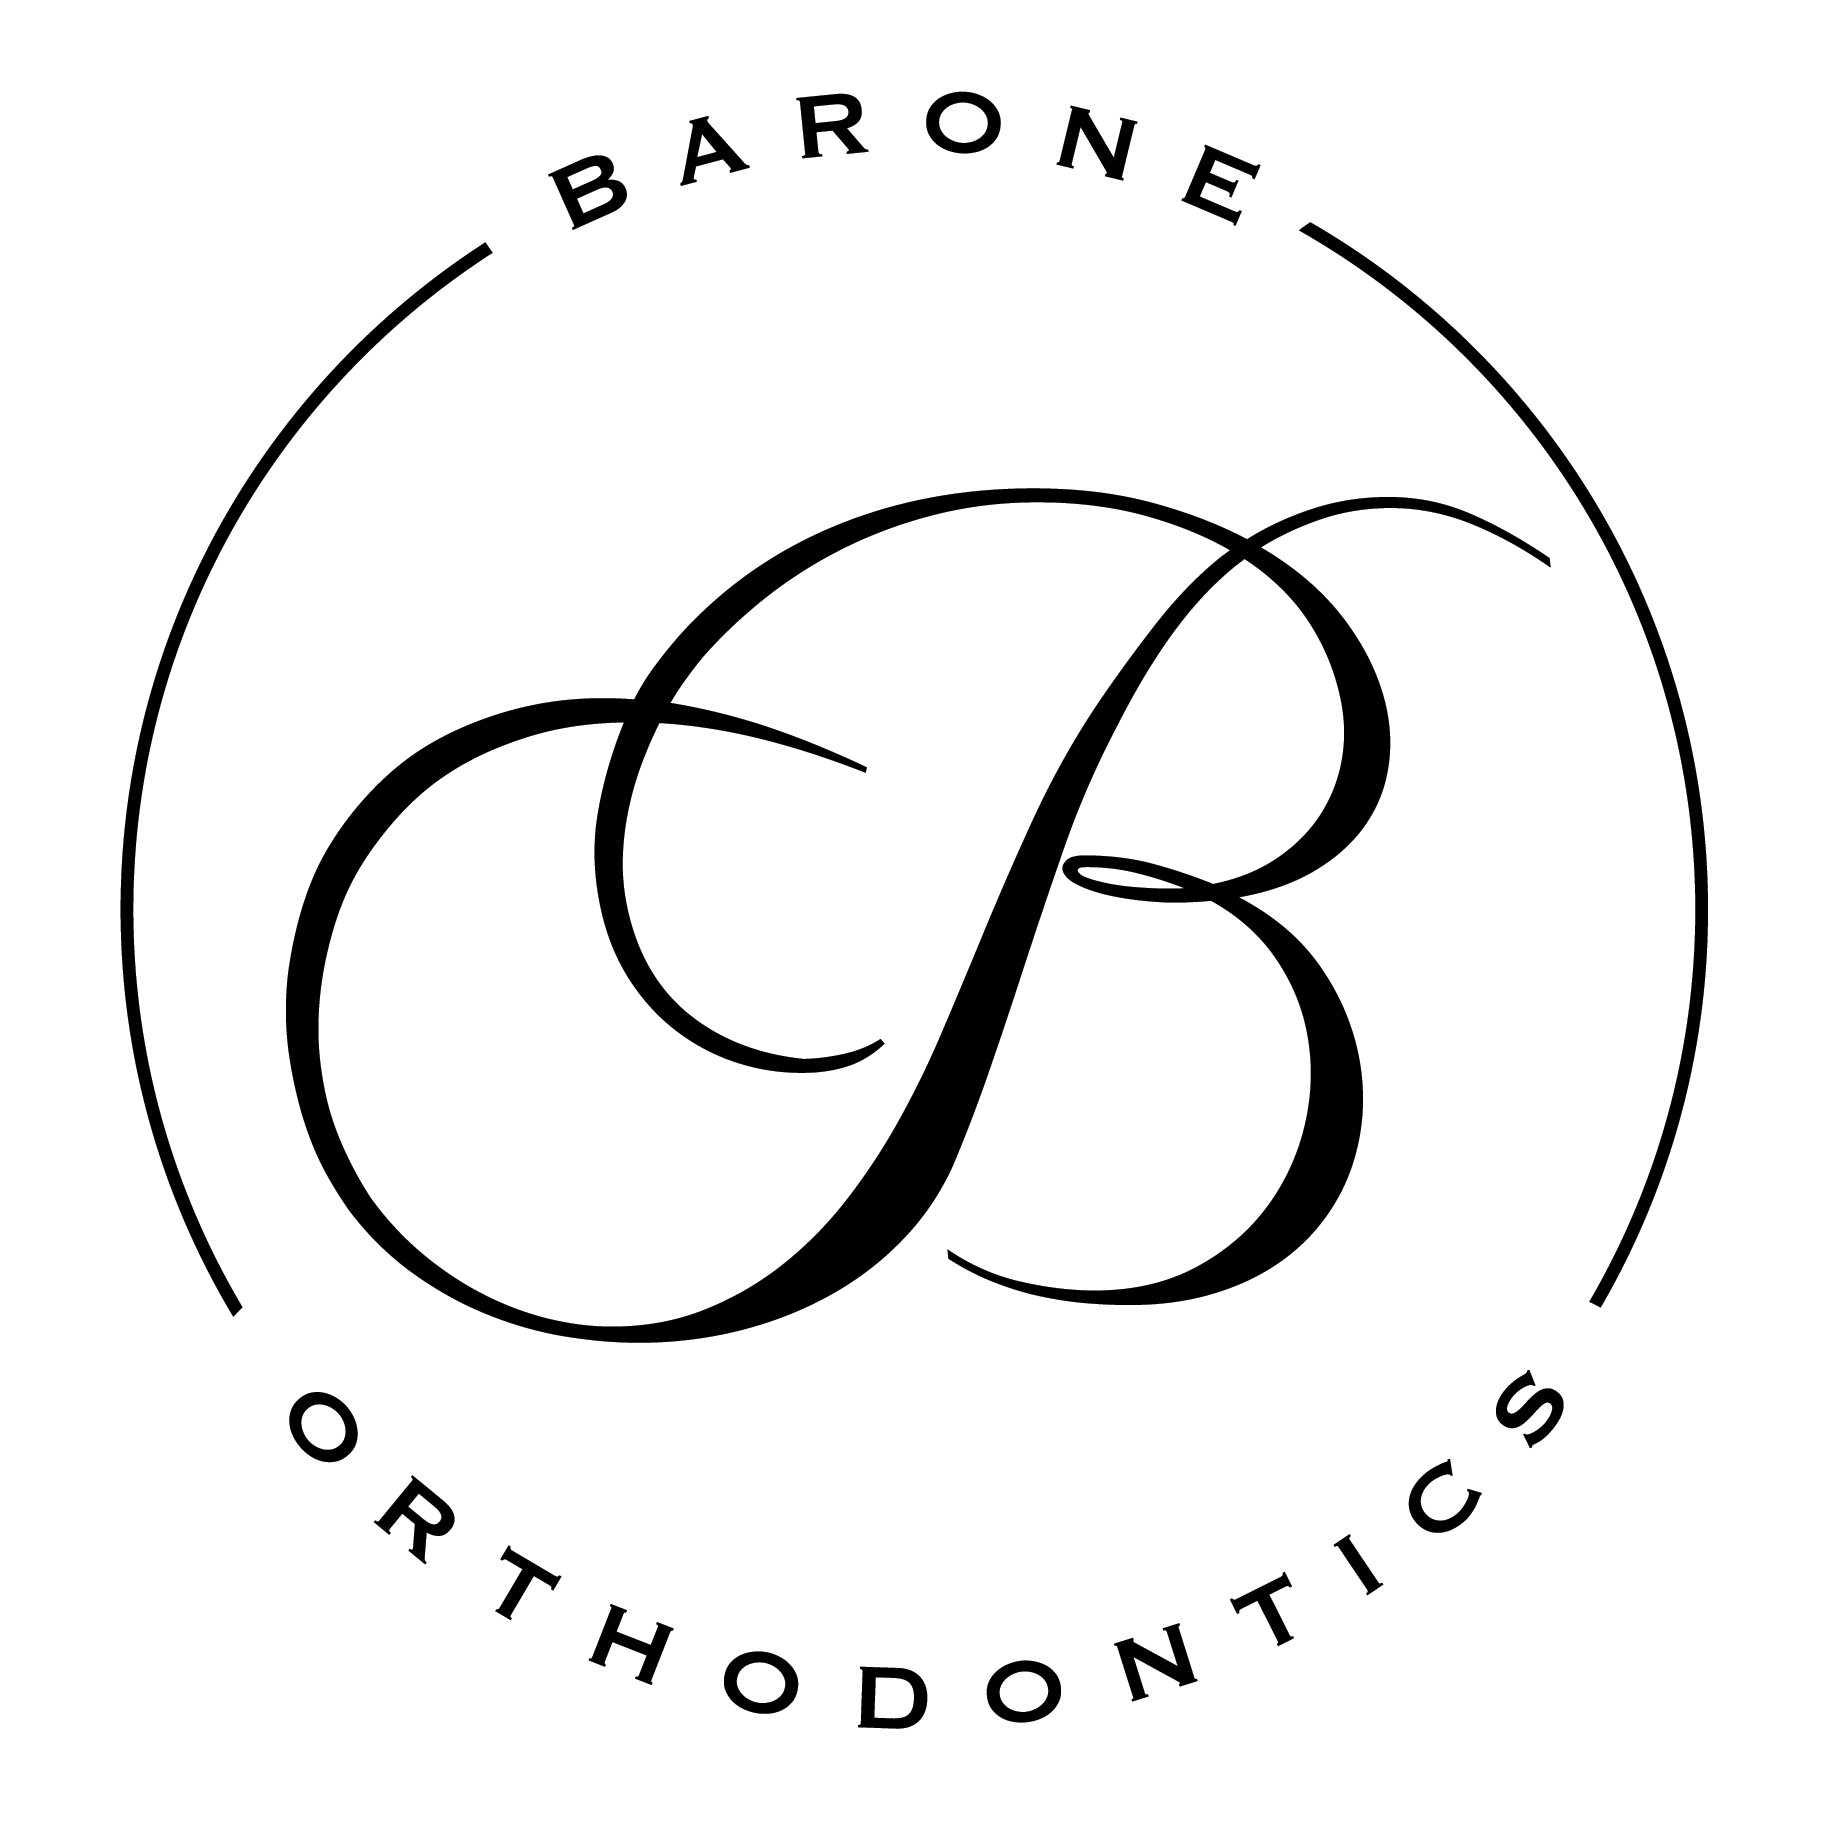 Barone Orthodontics Submark - White